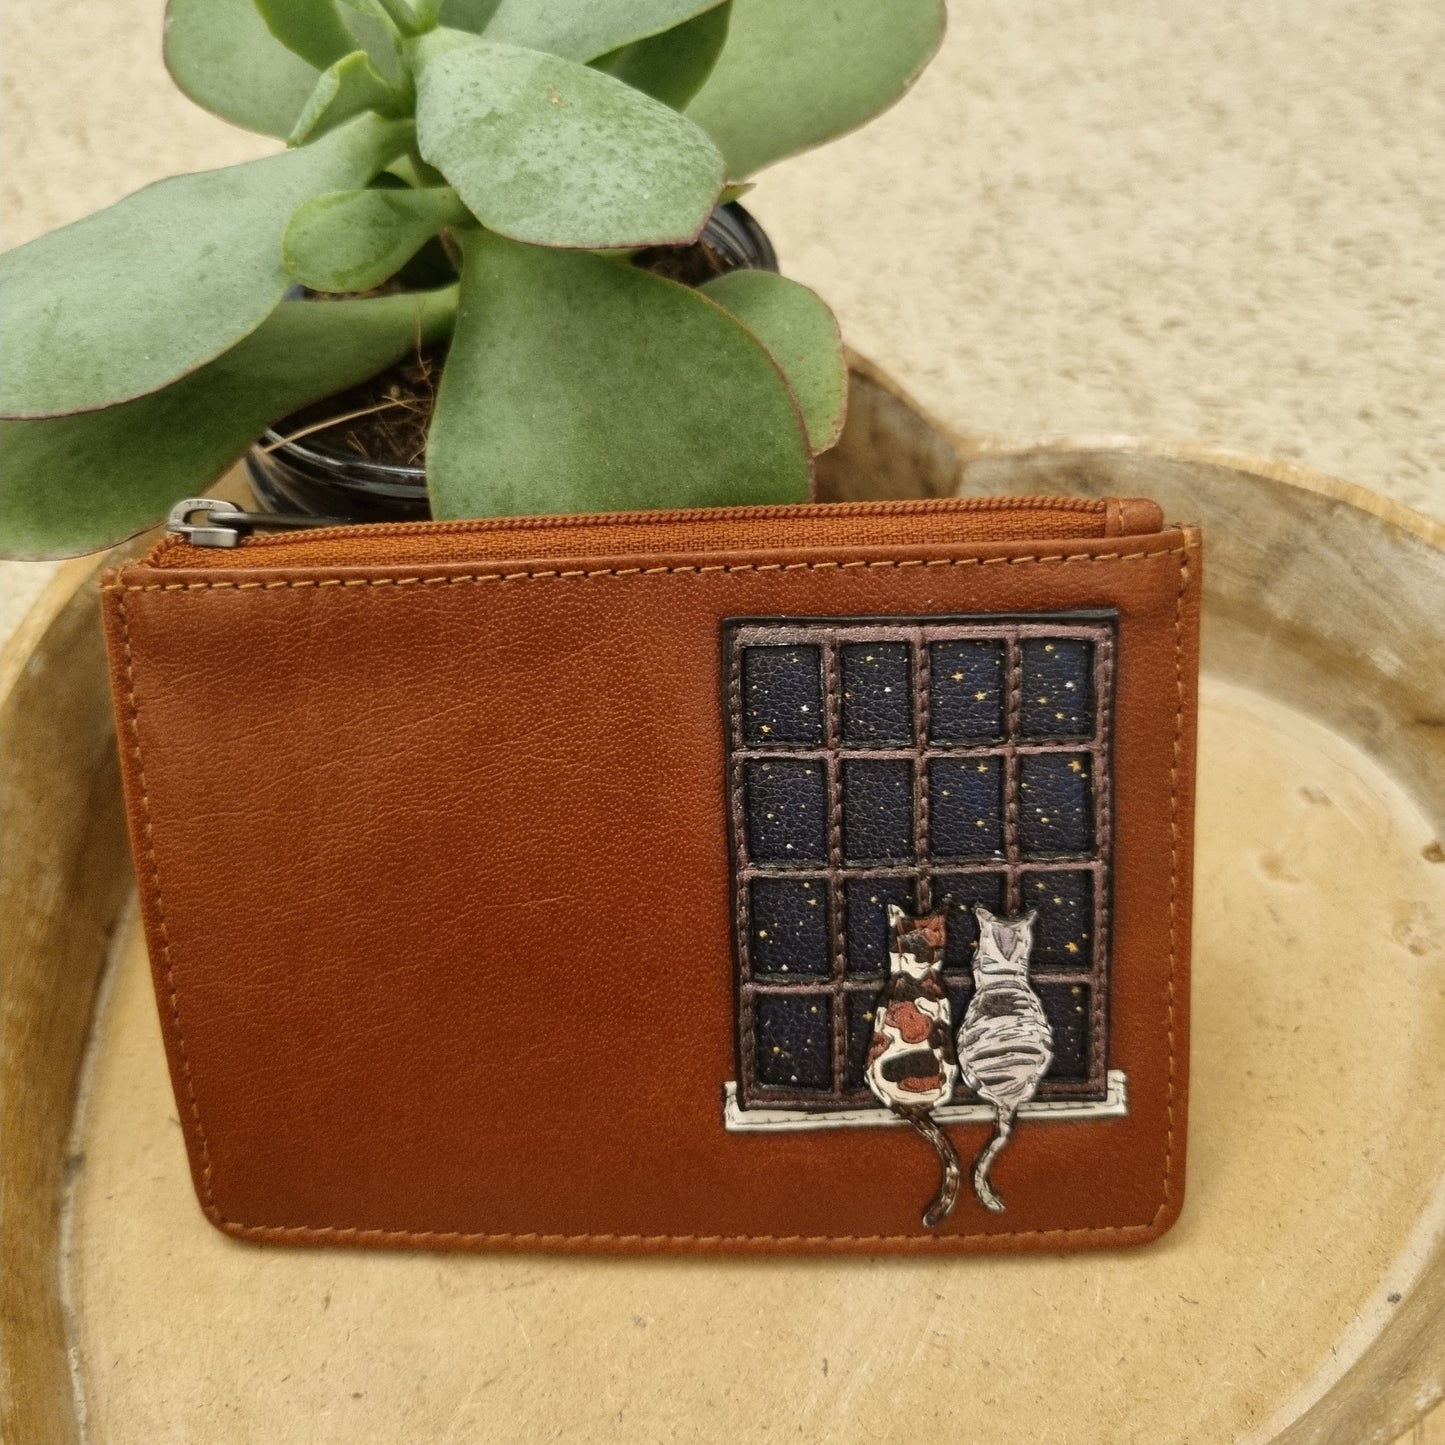 Yoshi Midnight Cats zip top purse